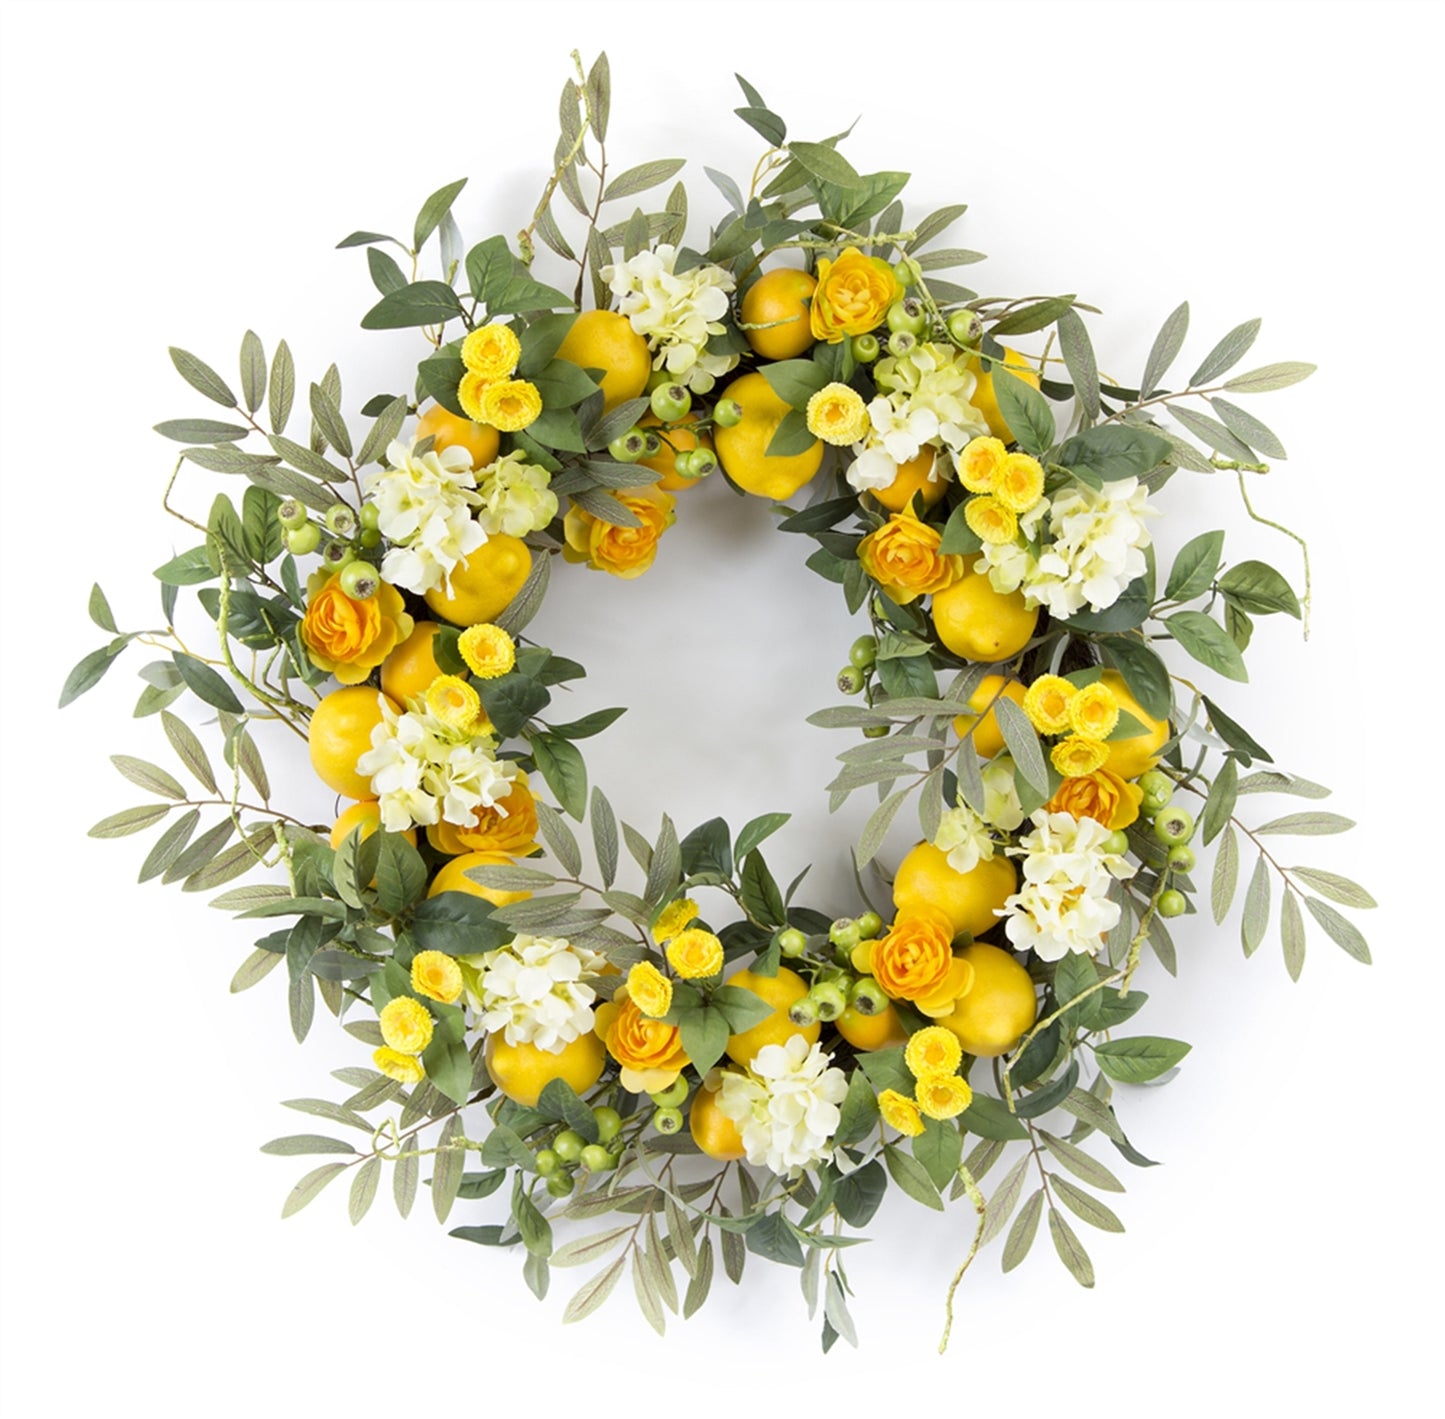 Lemon And Floral Wreath 28"